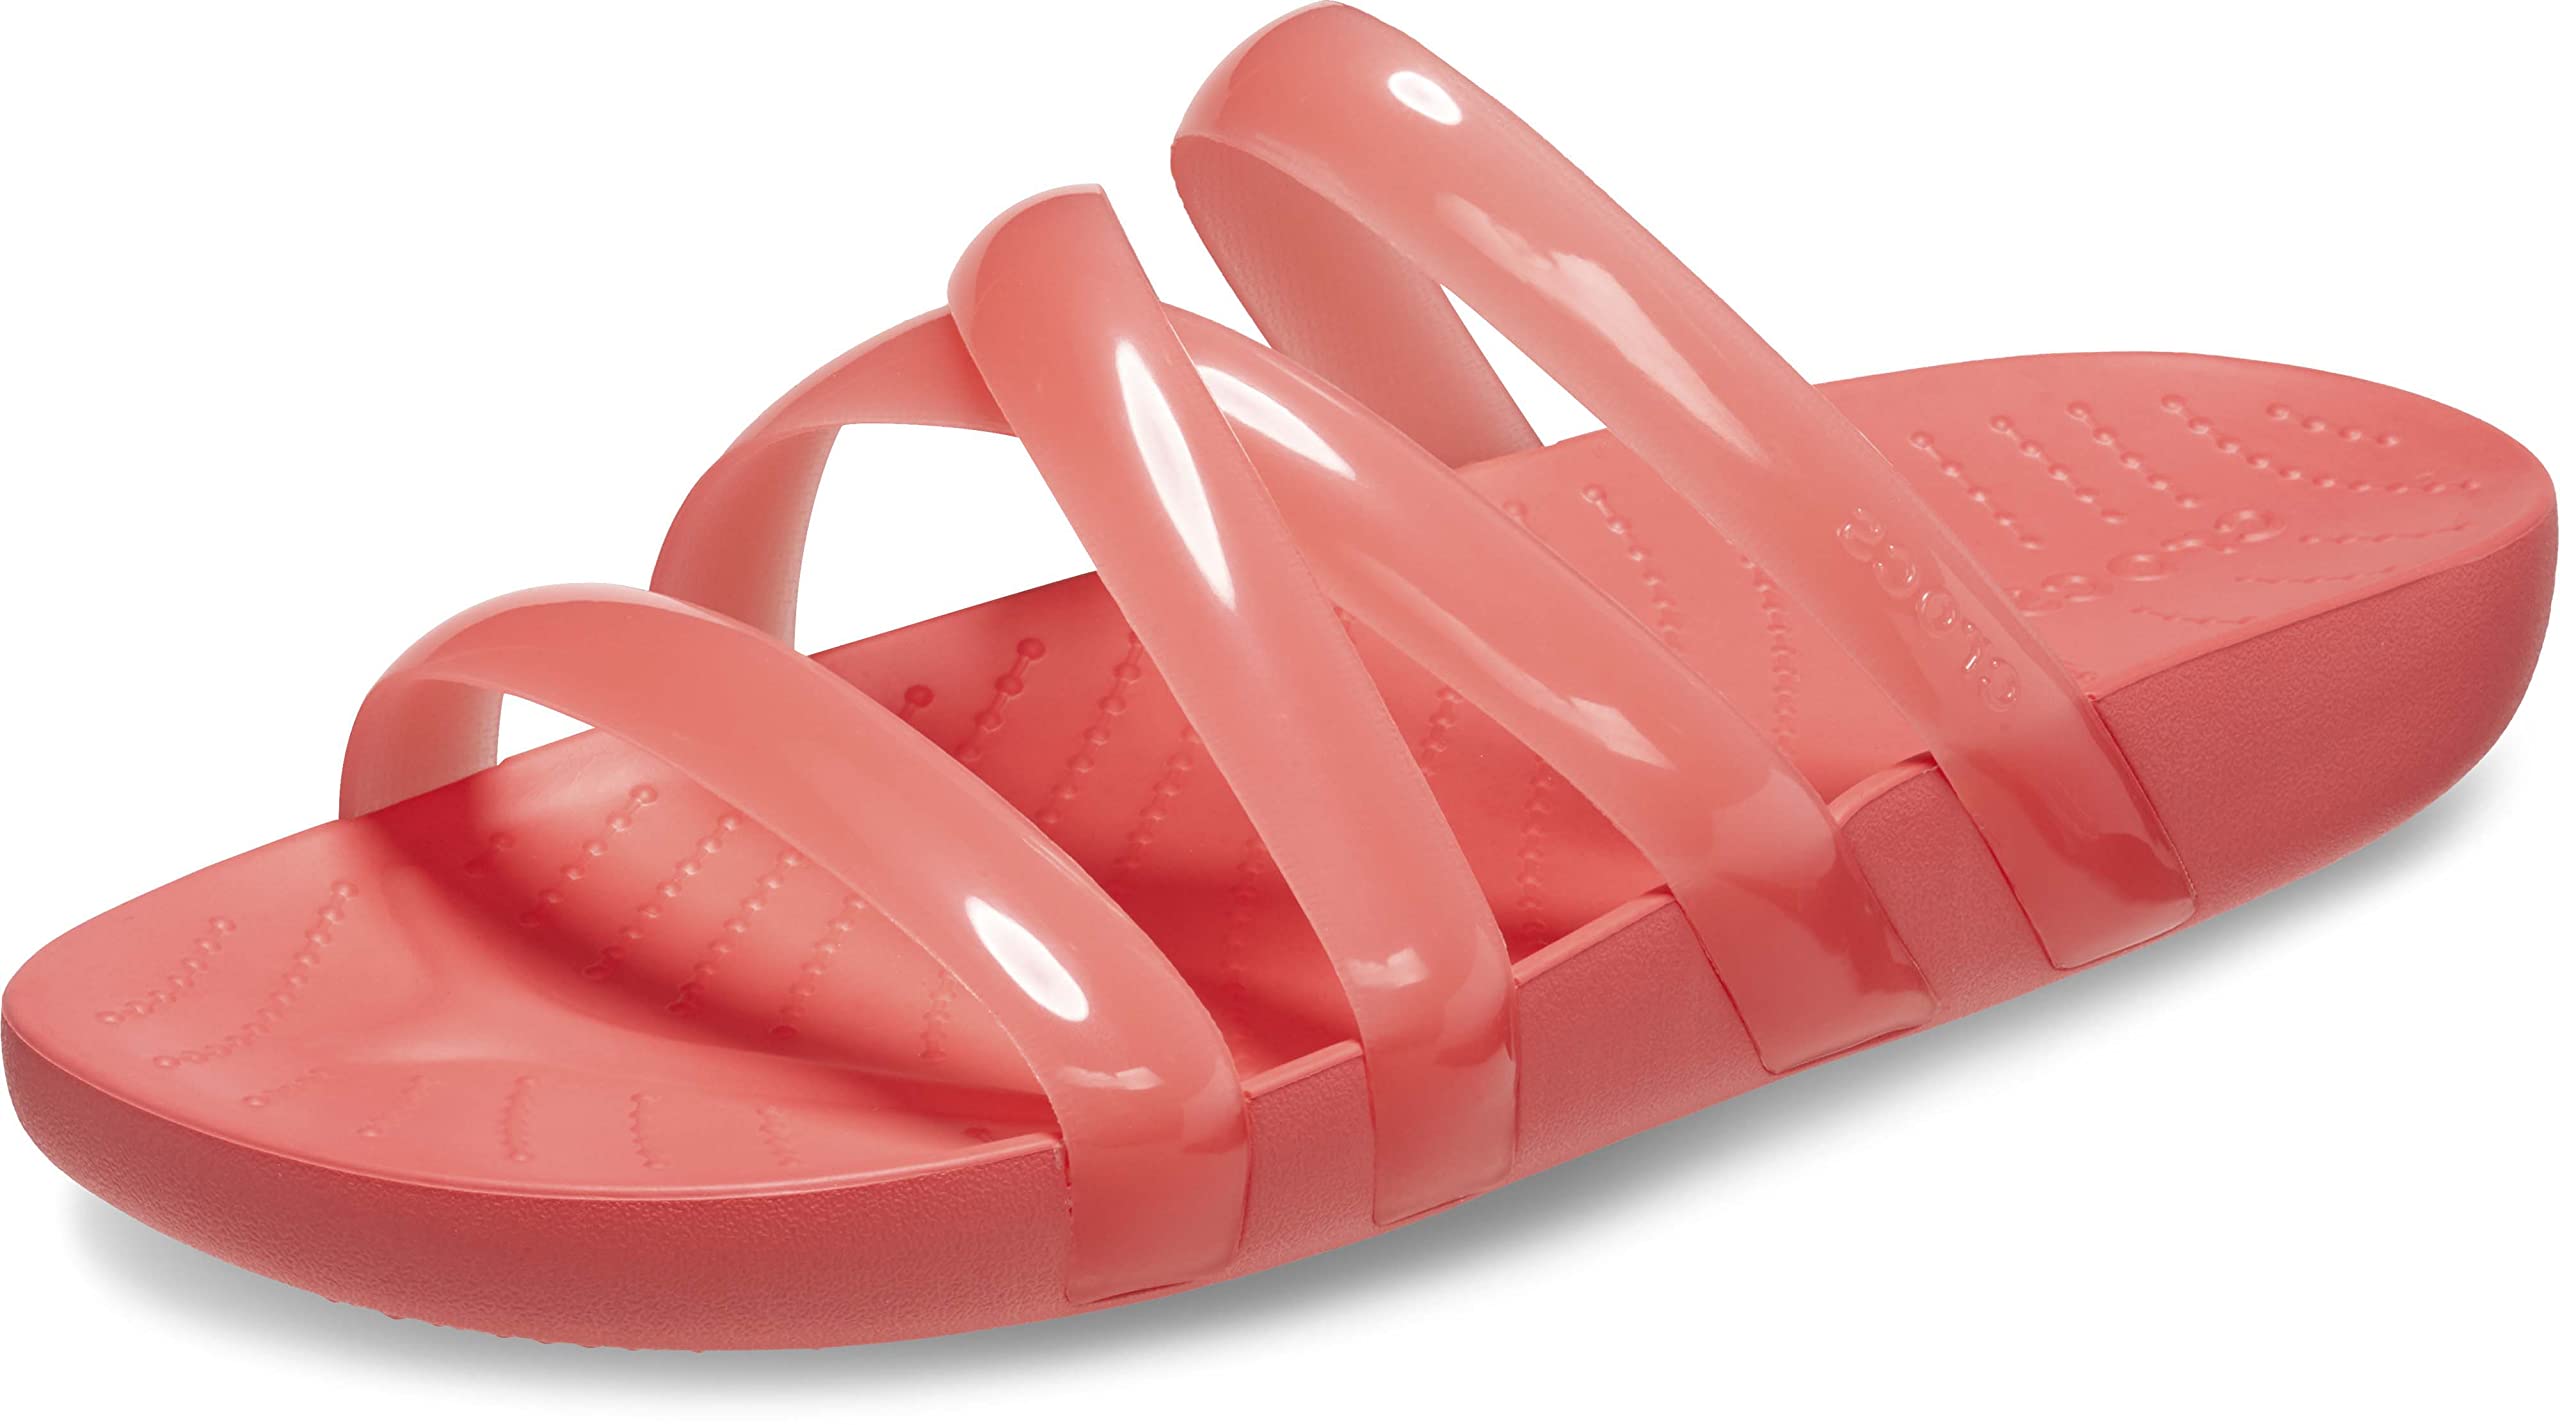 Crocs Women's Splash Strappy Sandals